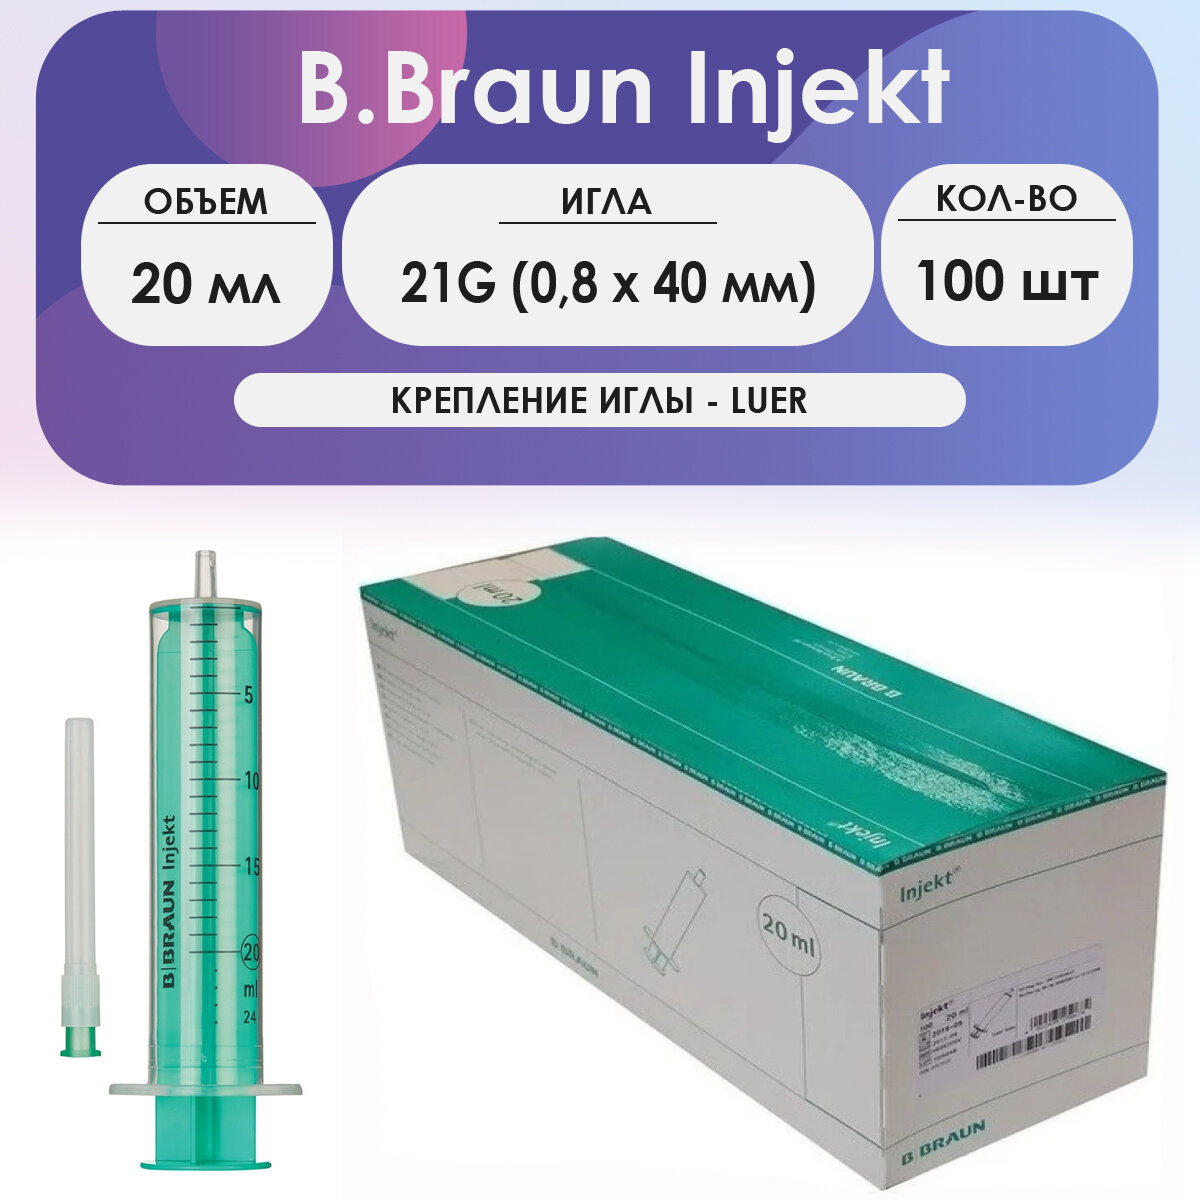 Шприц B.Braun Injekt двухкомпонентный 20 мл игла 21G (0,8 х 40) - 100 шт